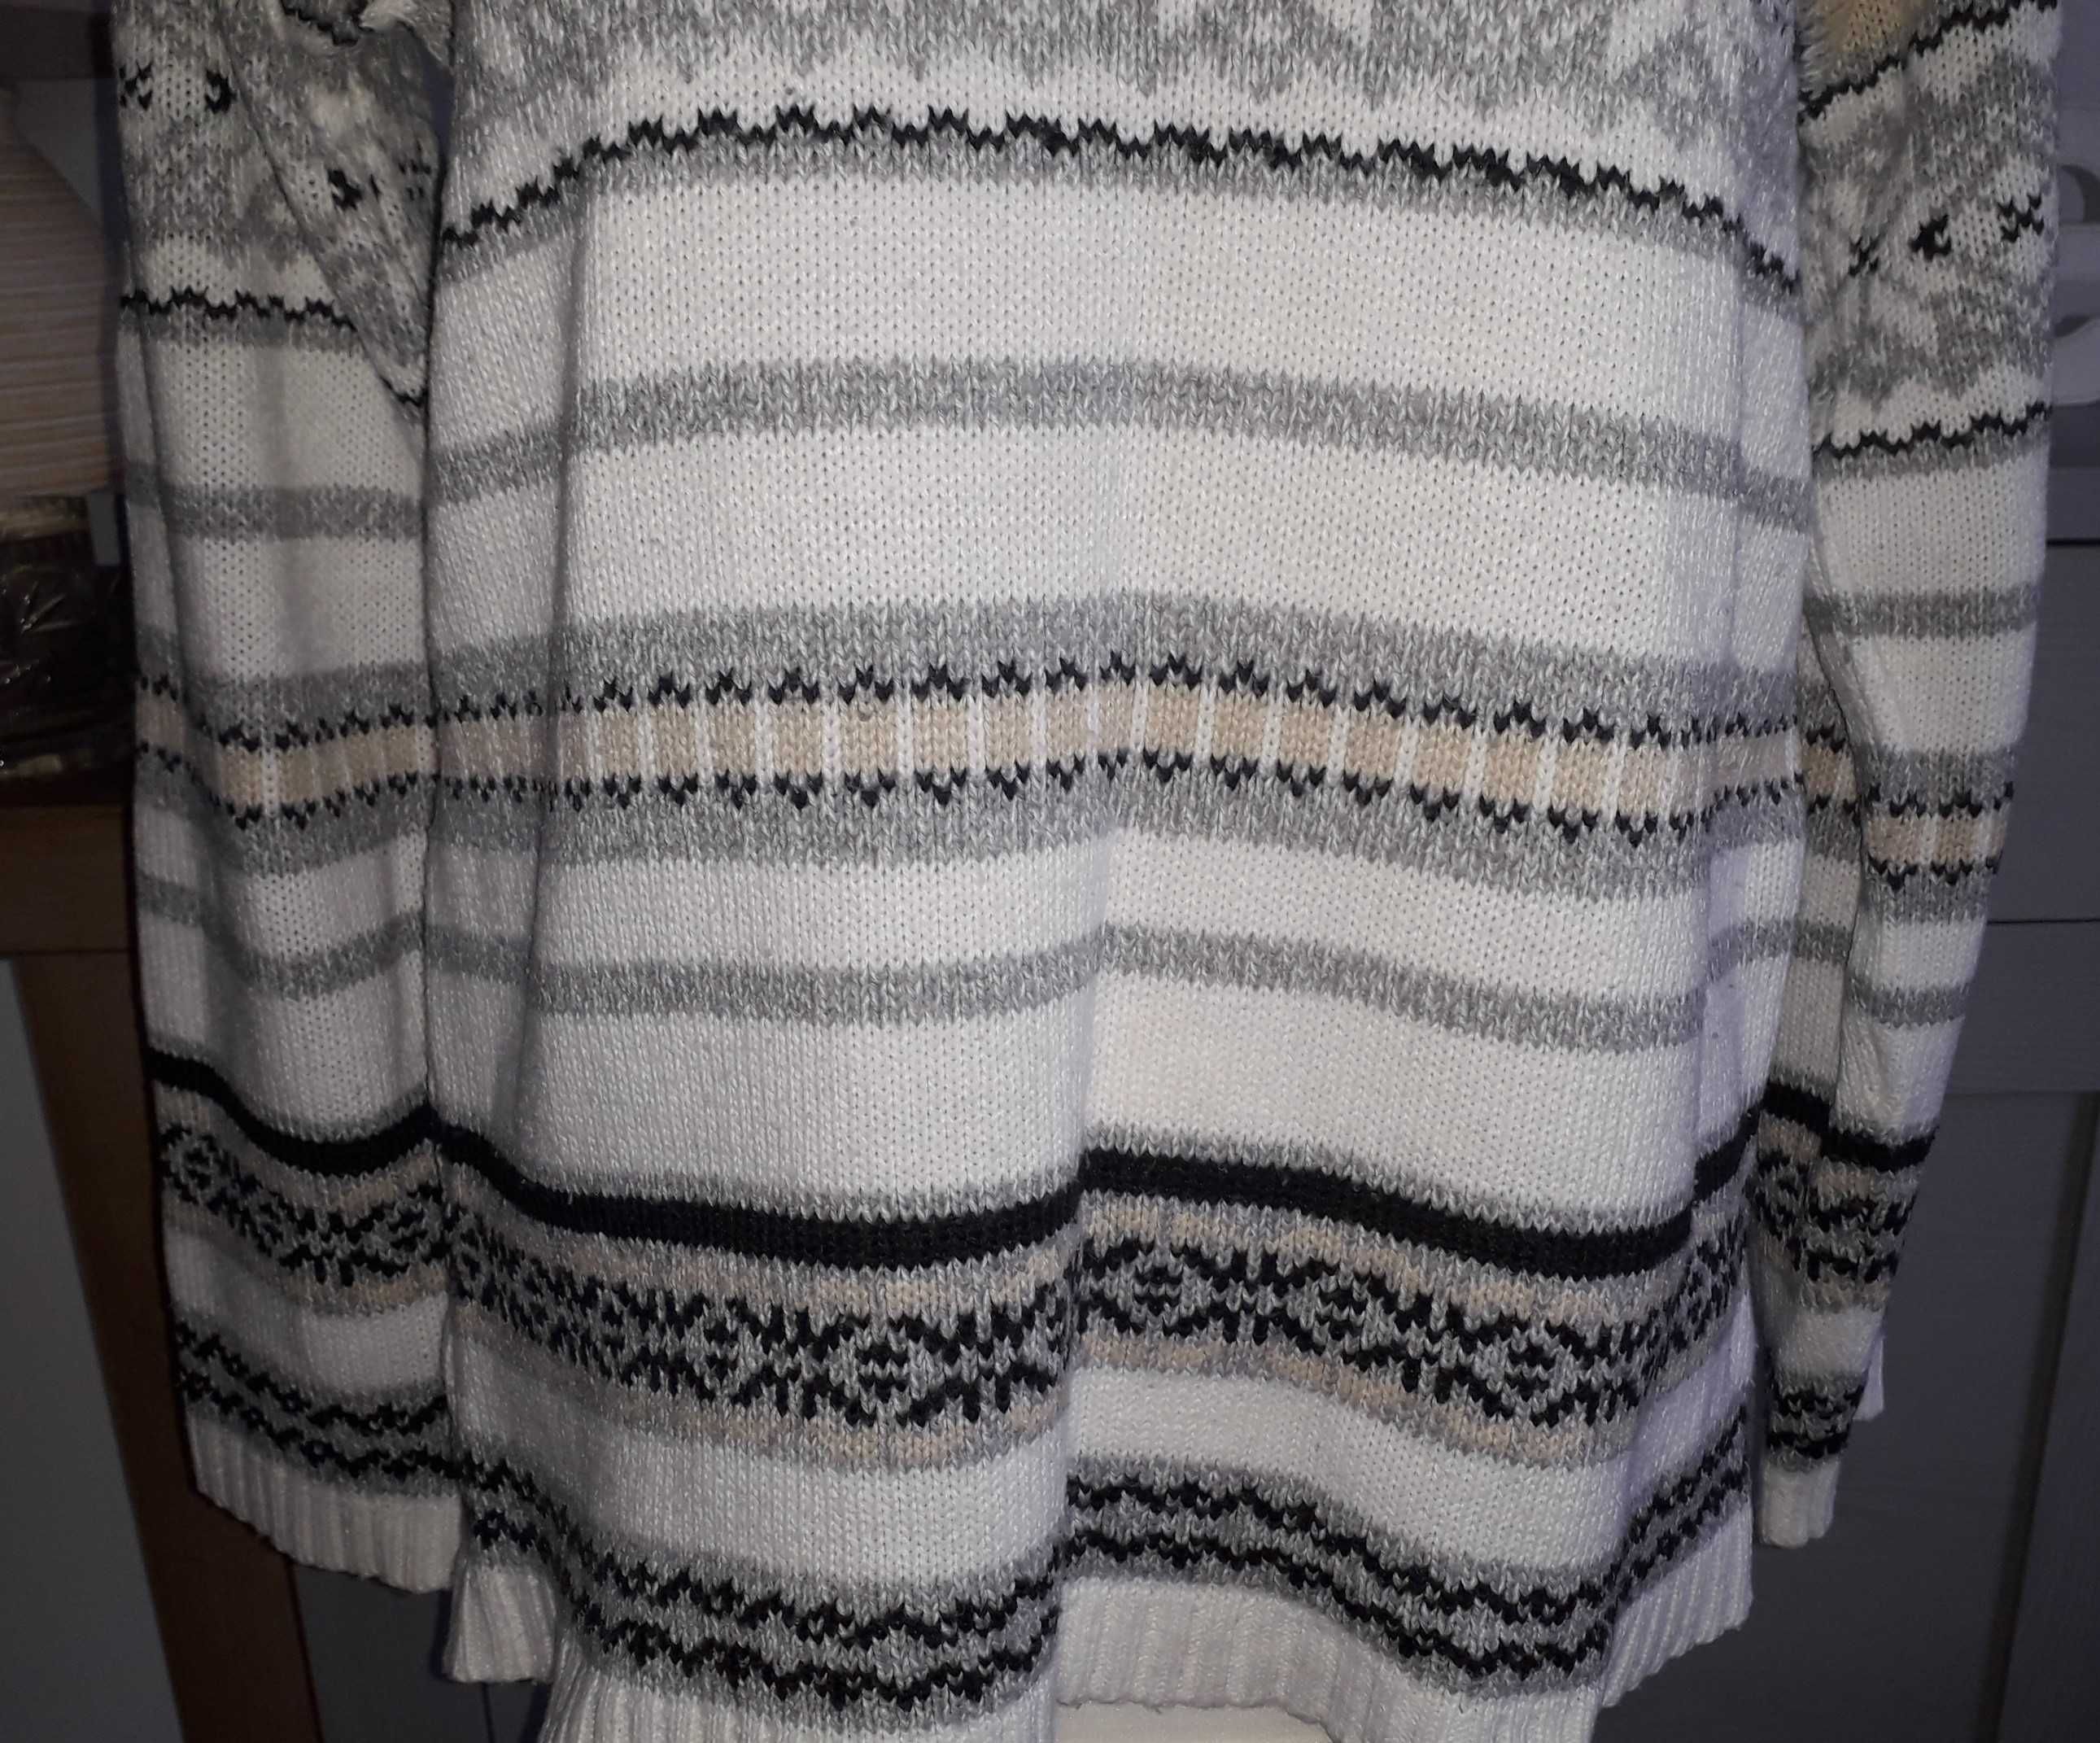 Sweter wzory roz.M/L